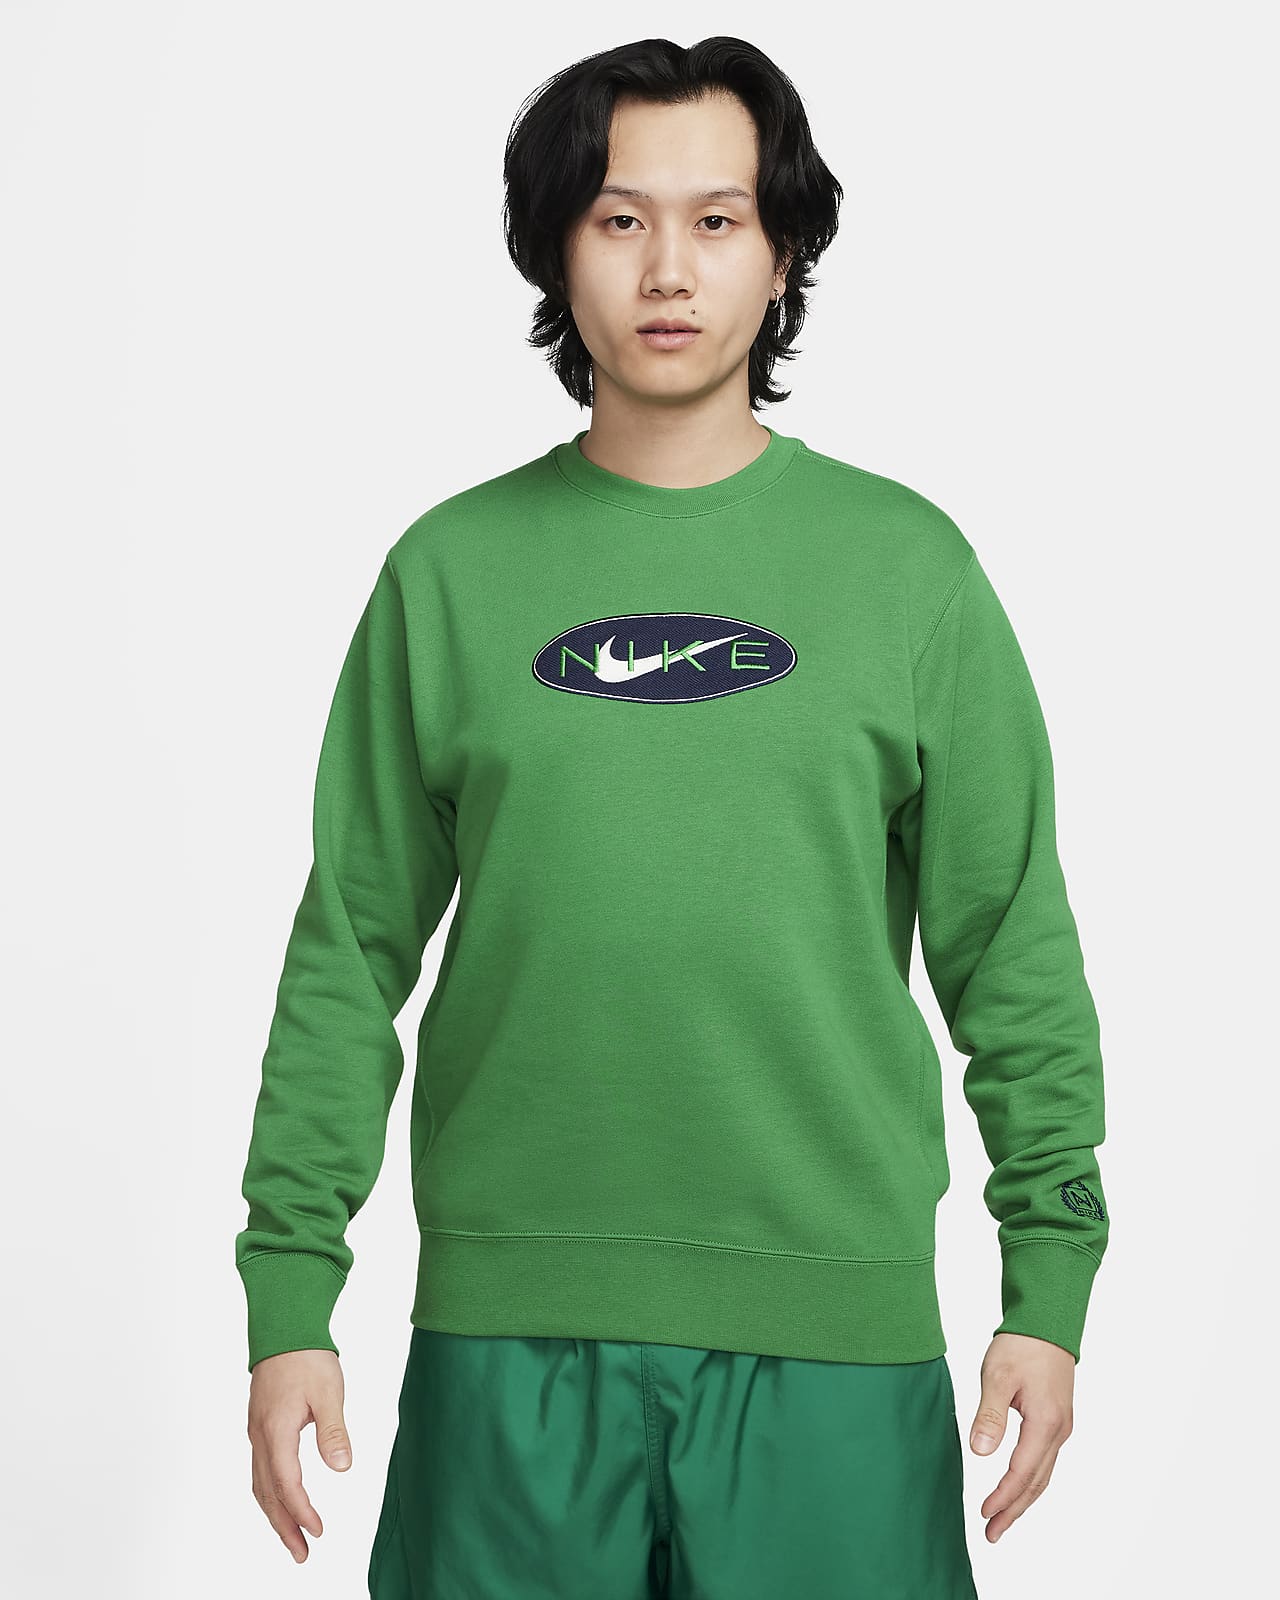 Nike Sportswear Men's French Terry Crewneck Sweatshirt